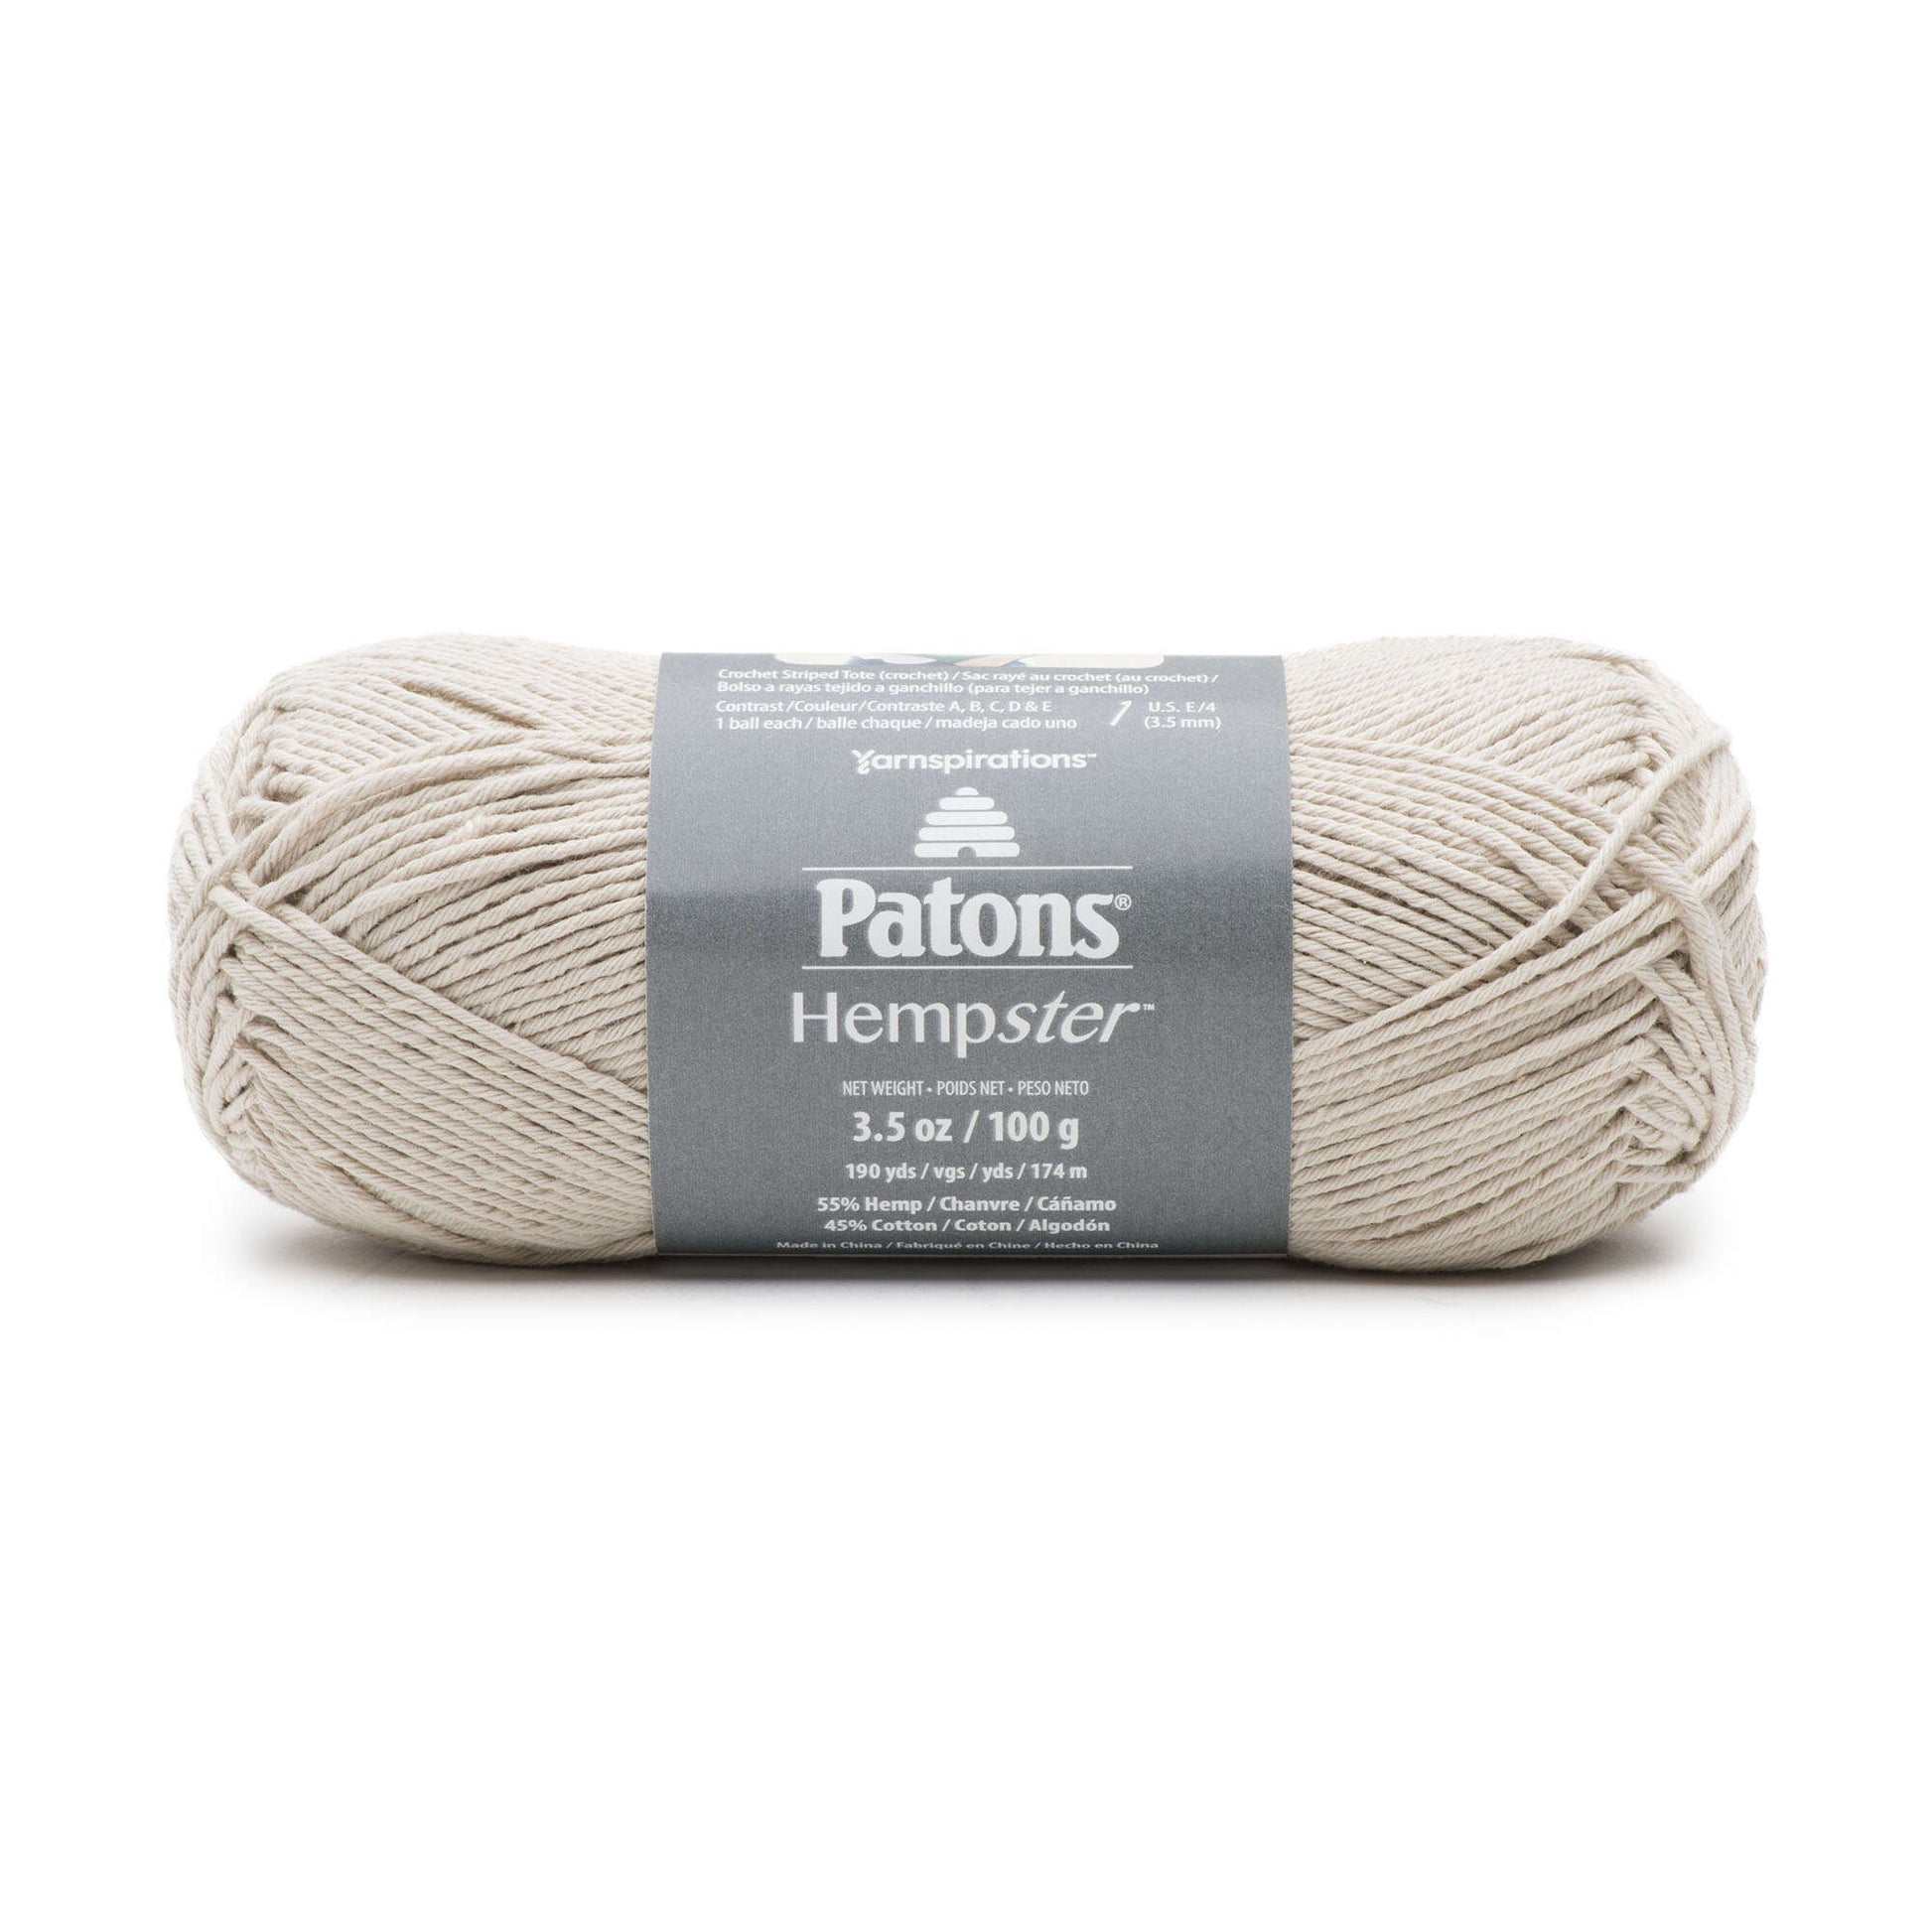 Patons Hempster Yarn - Discontinued Shades